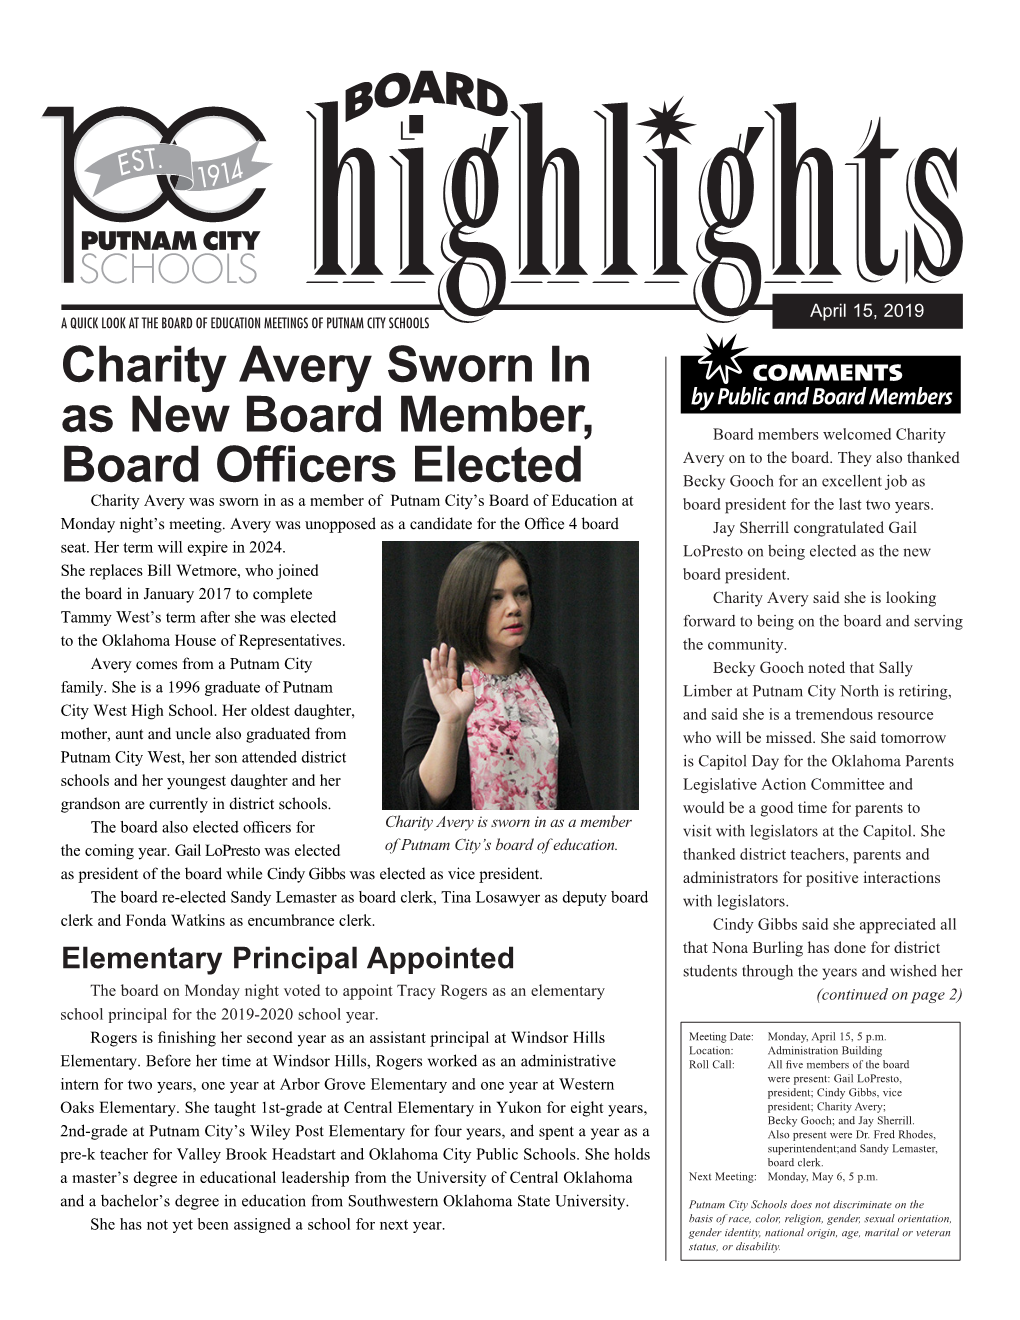 Charity Avery Sworn in As New Board Member, Board Officers Elected